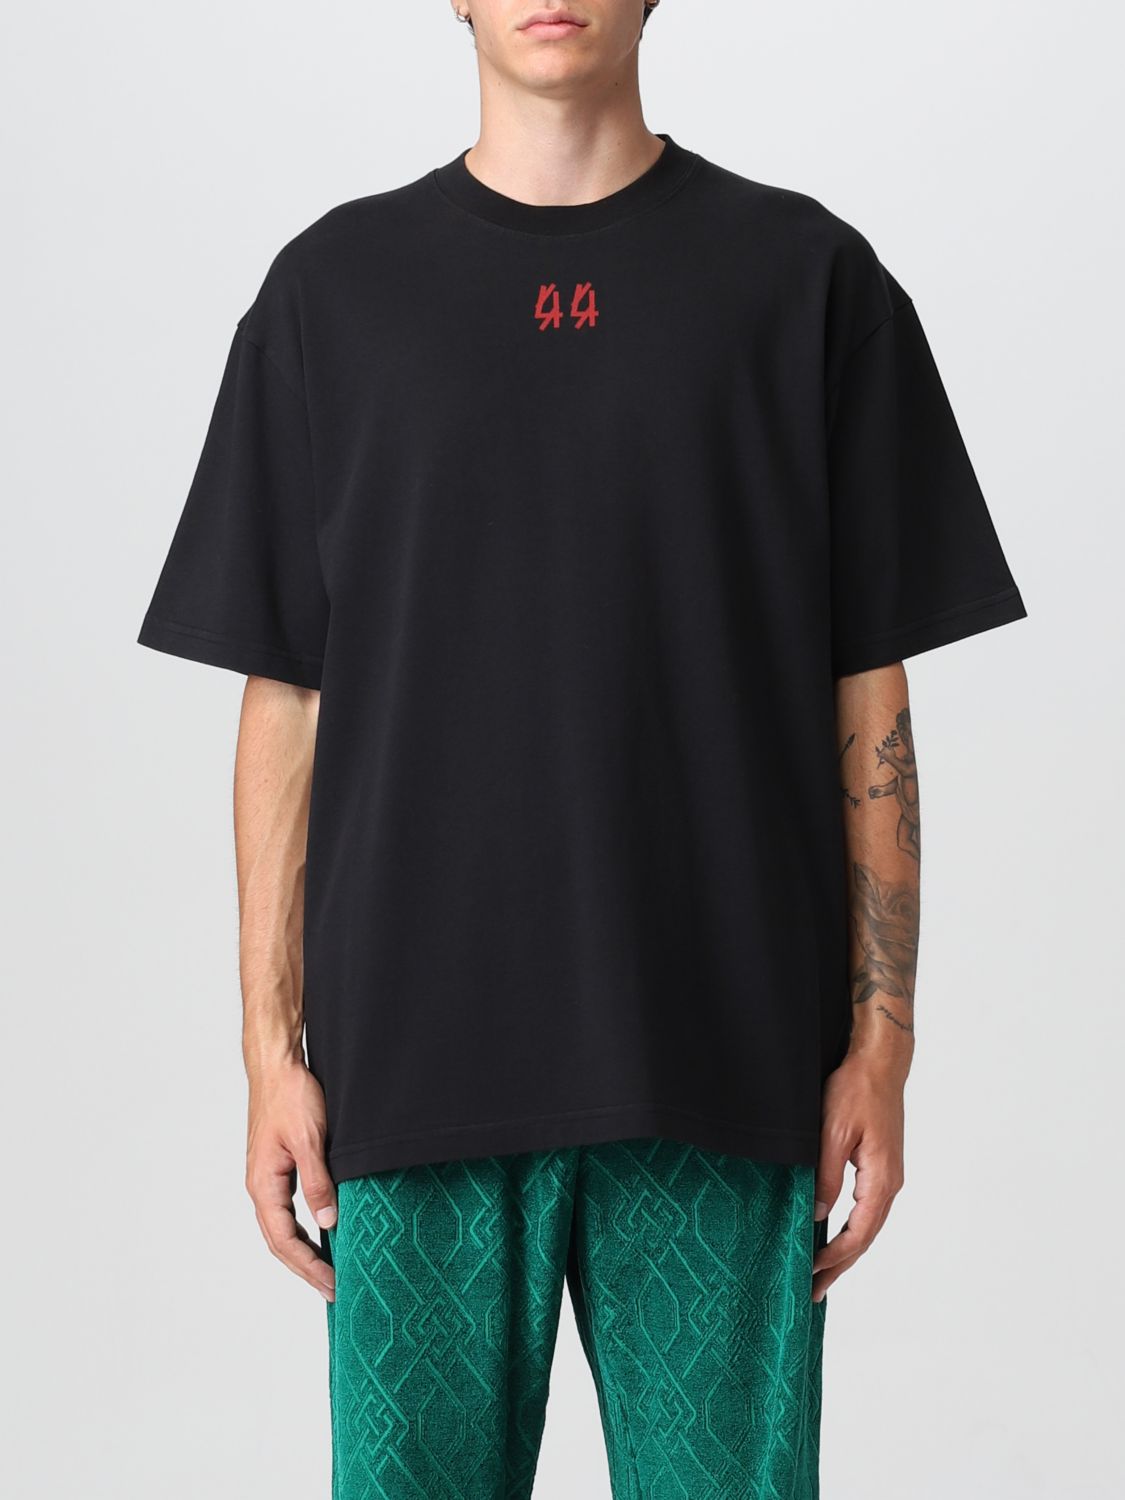 44 LABEL GROUP: t-shirt for man - Black | 44 Label Group t-shirt ...